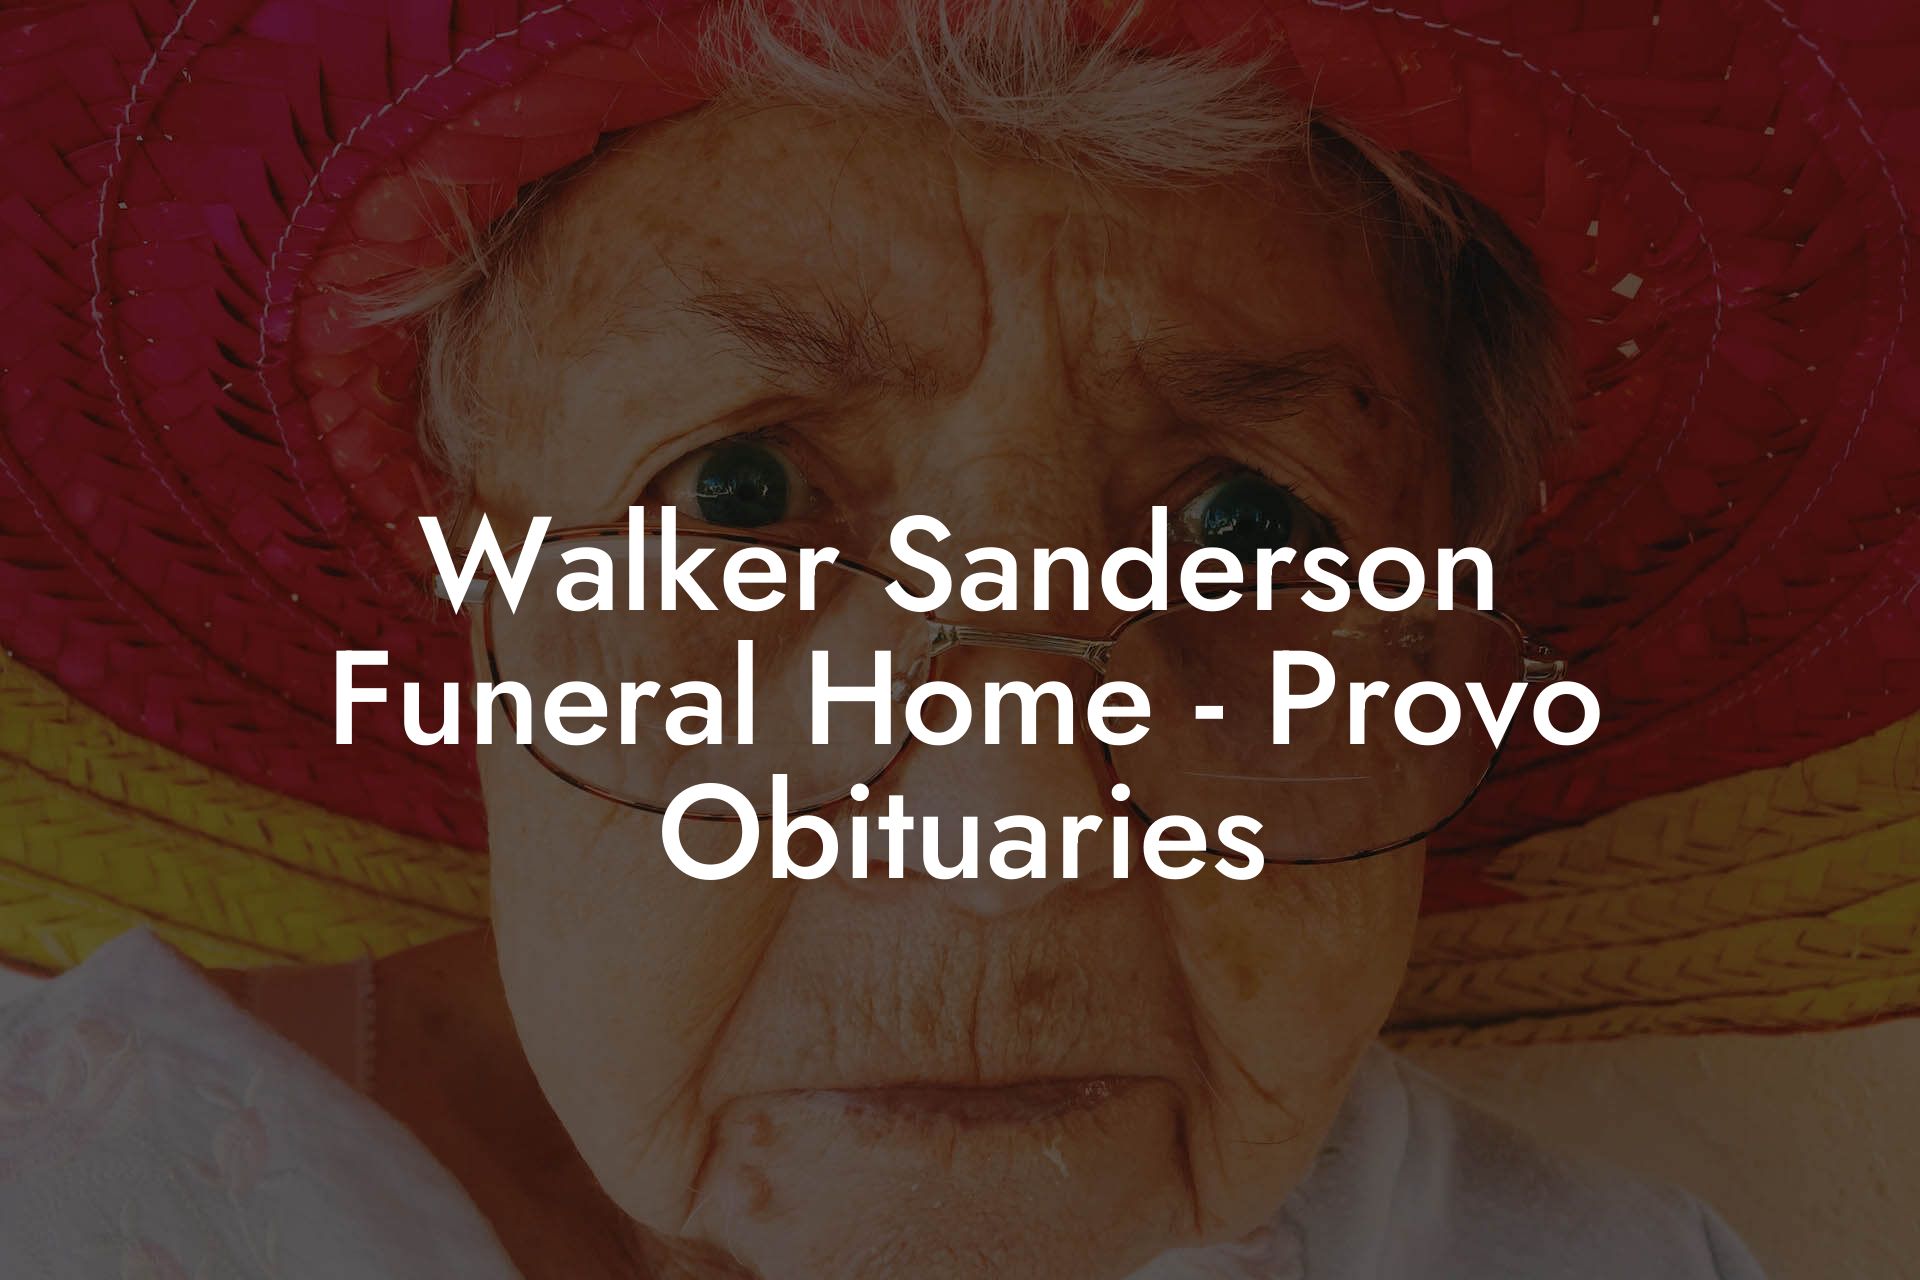 Walker Sanderson Funeral Home - Provo Obituaries